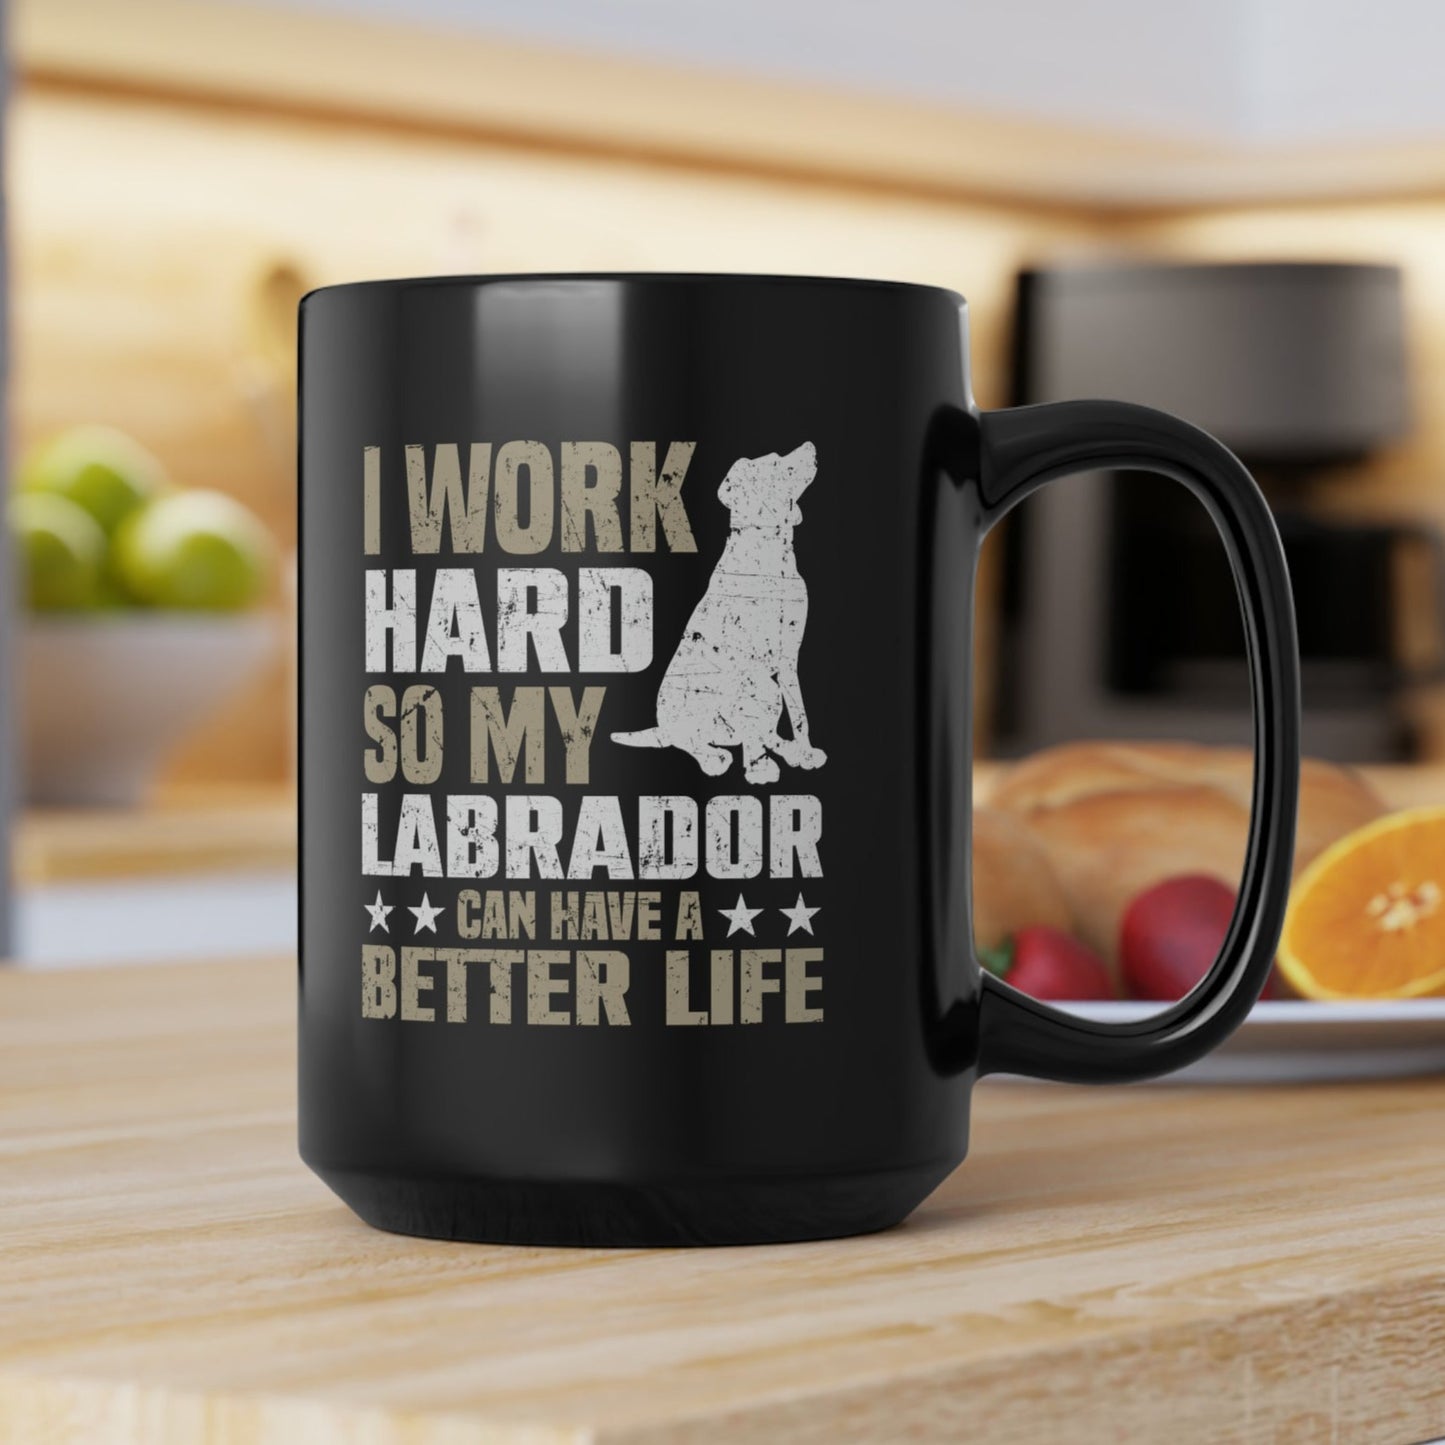 Work Hard for Labrador 15 oz Black Mug